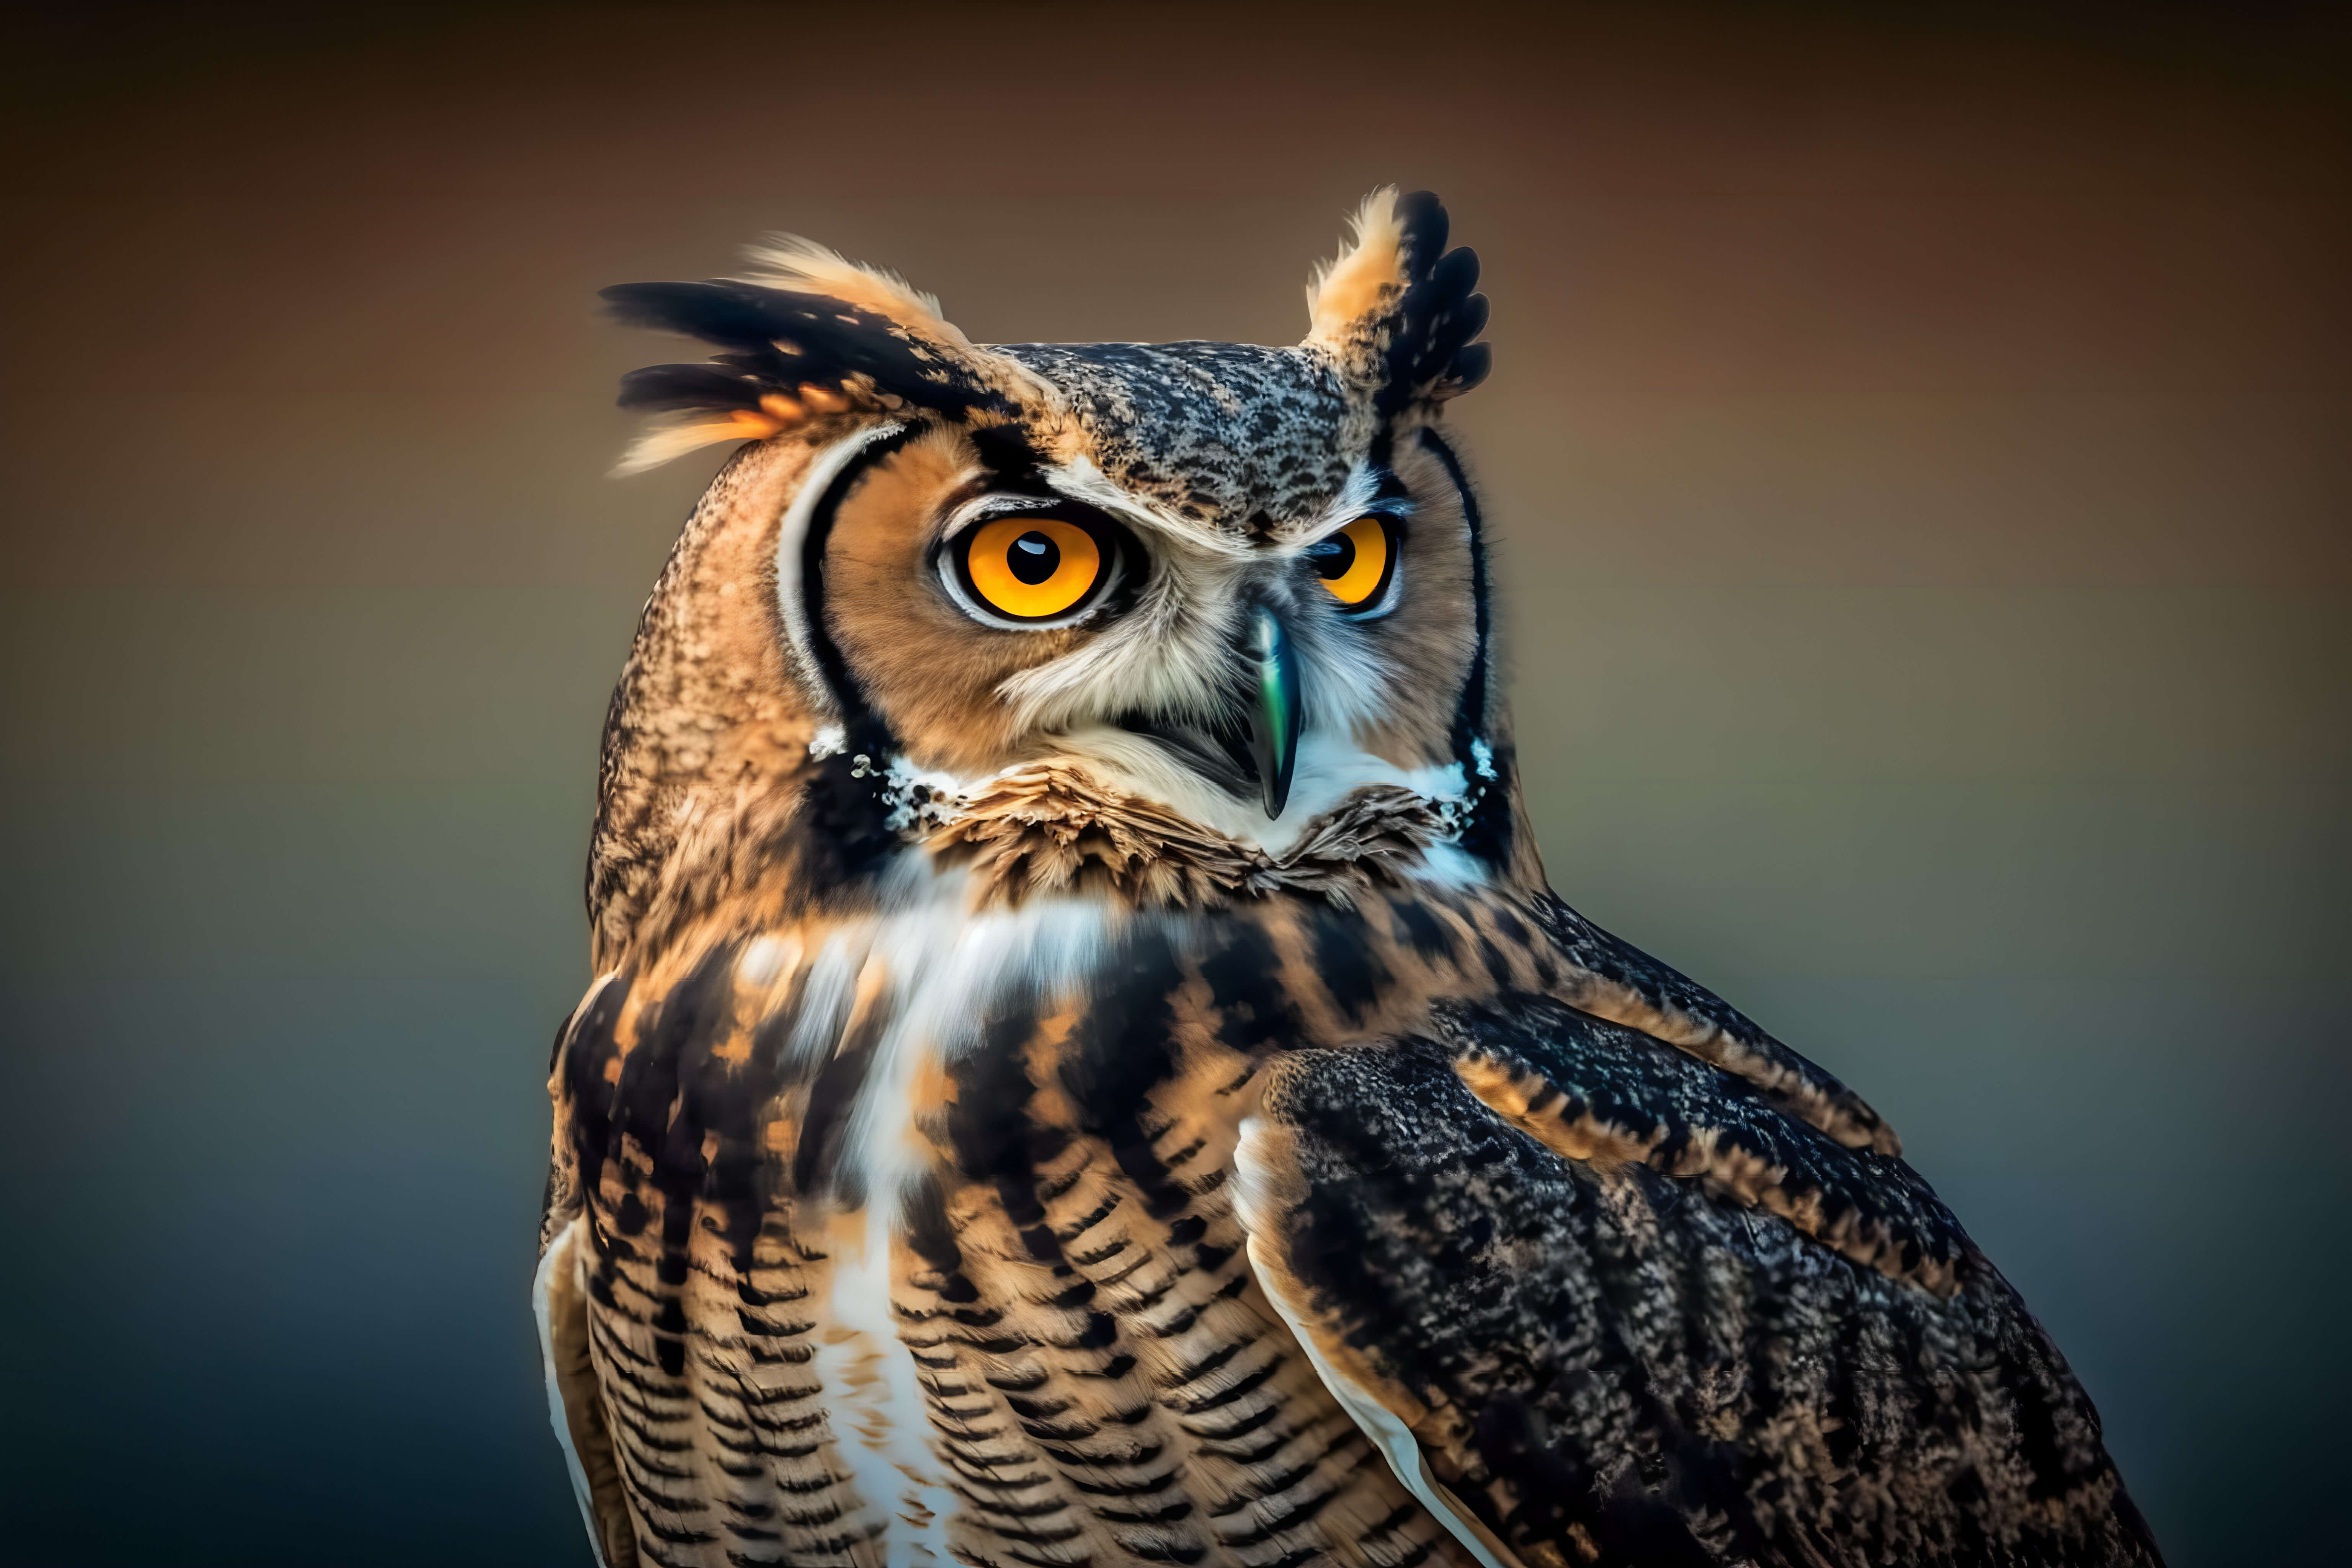 Owl Spirit Animal